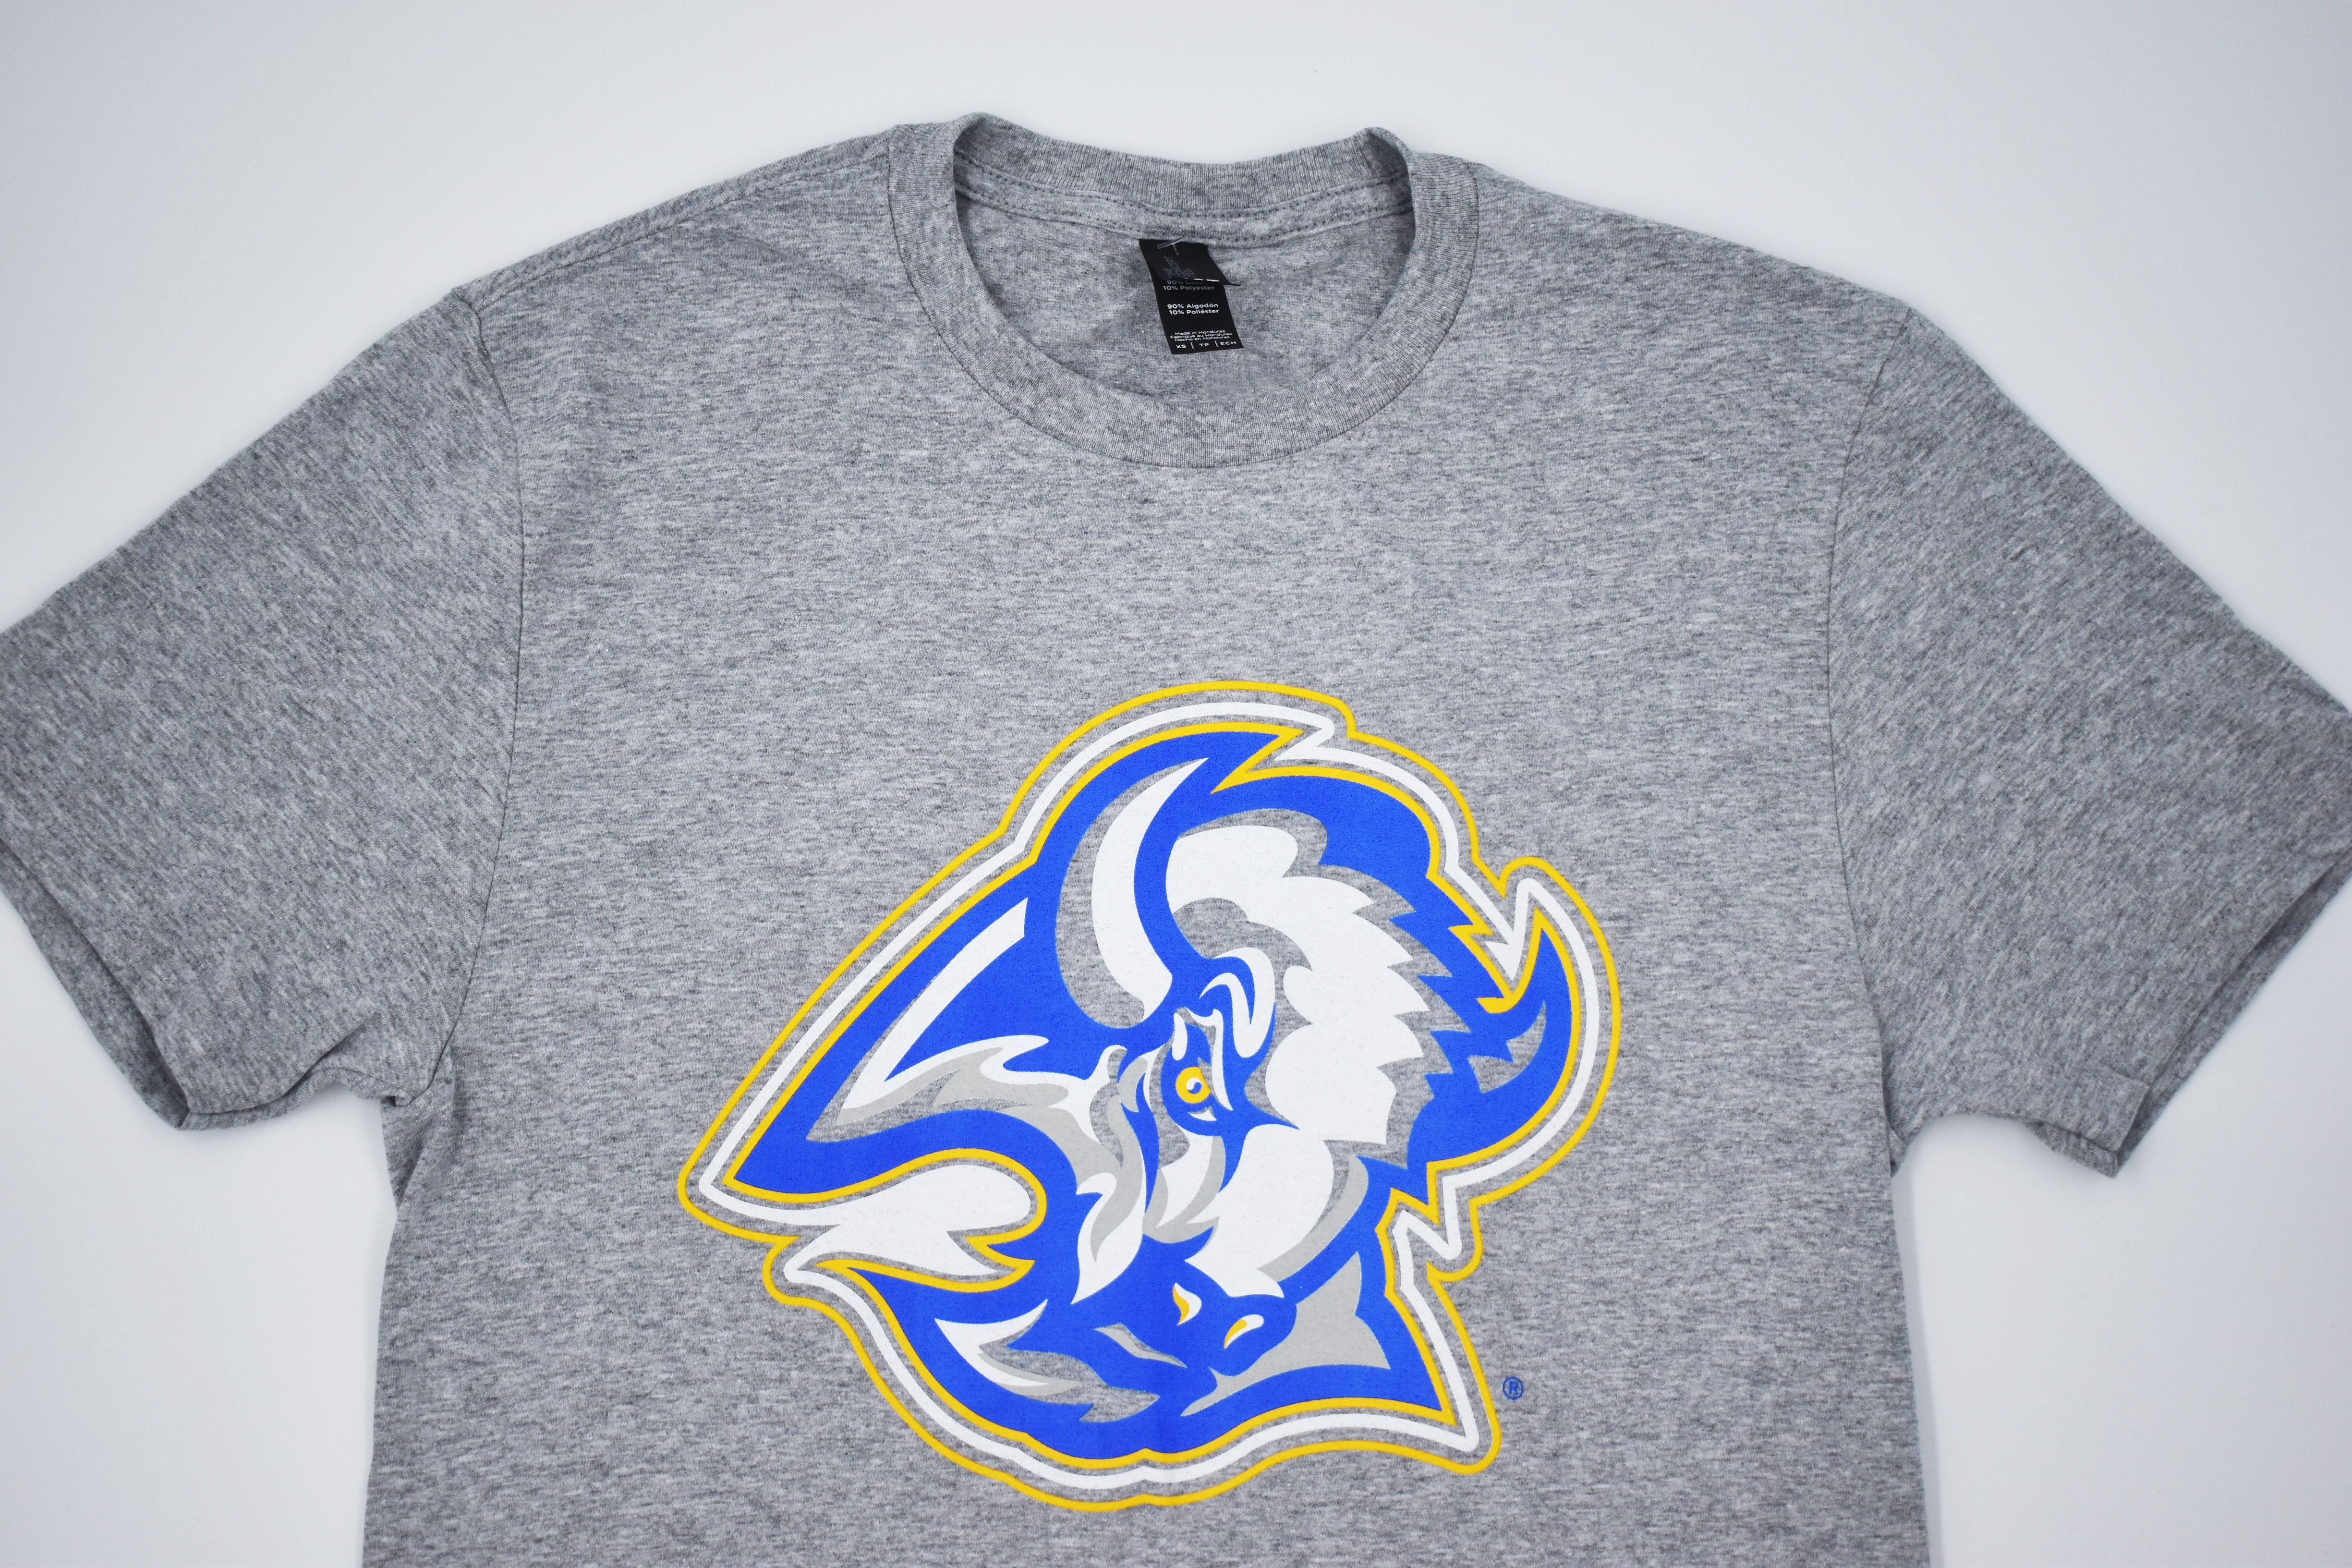 Buffalo sabres blue and gold goat head shirt - Kingteeshop